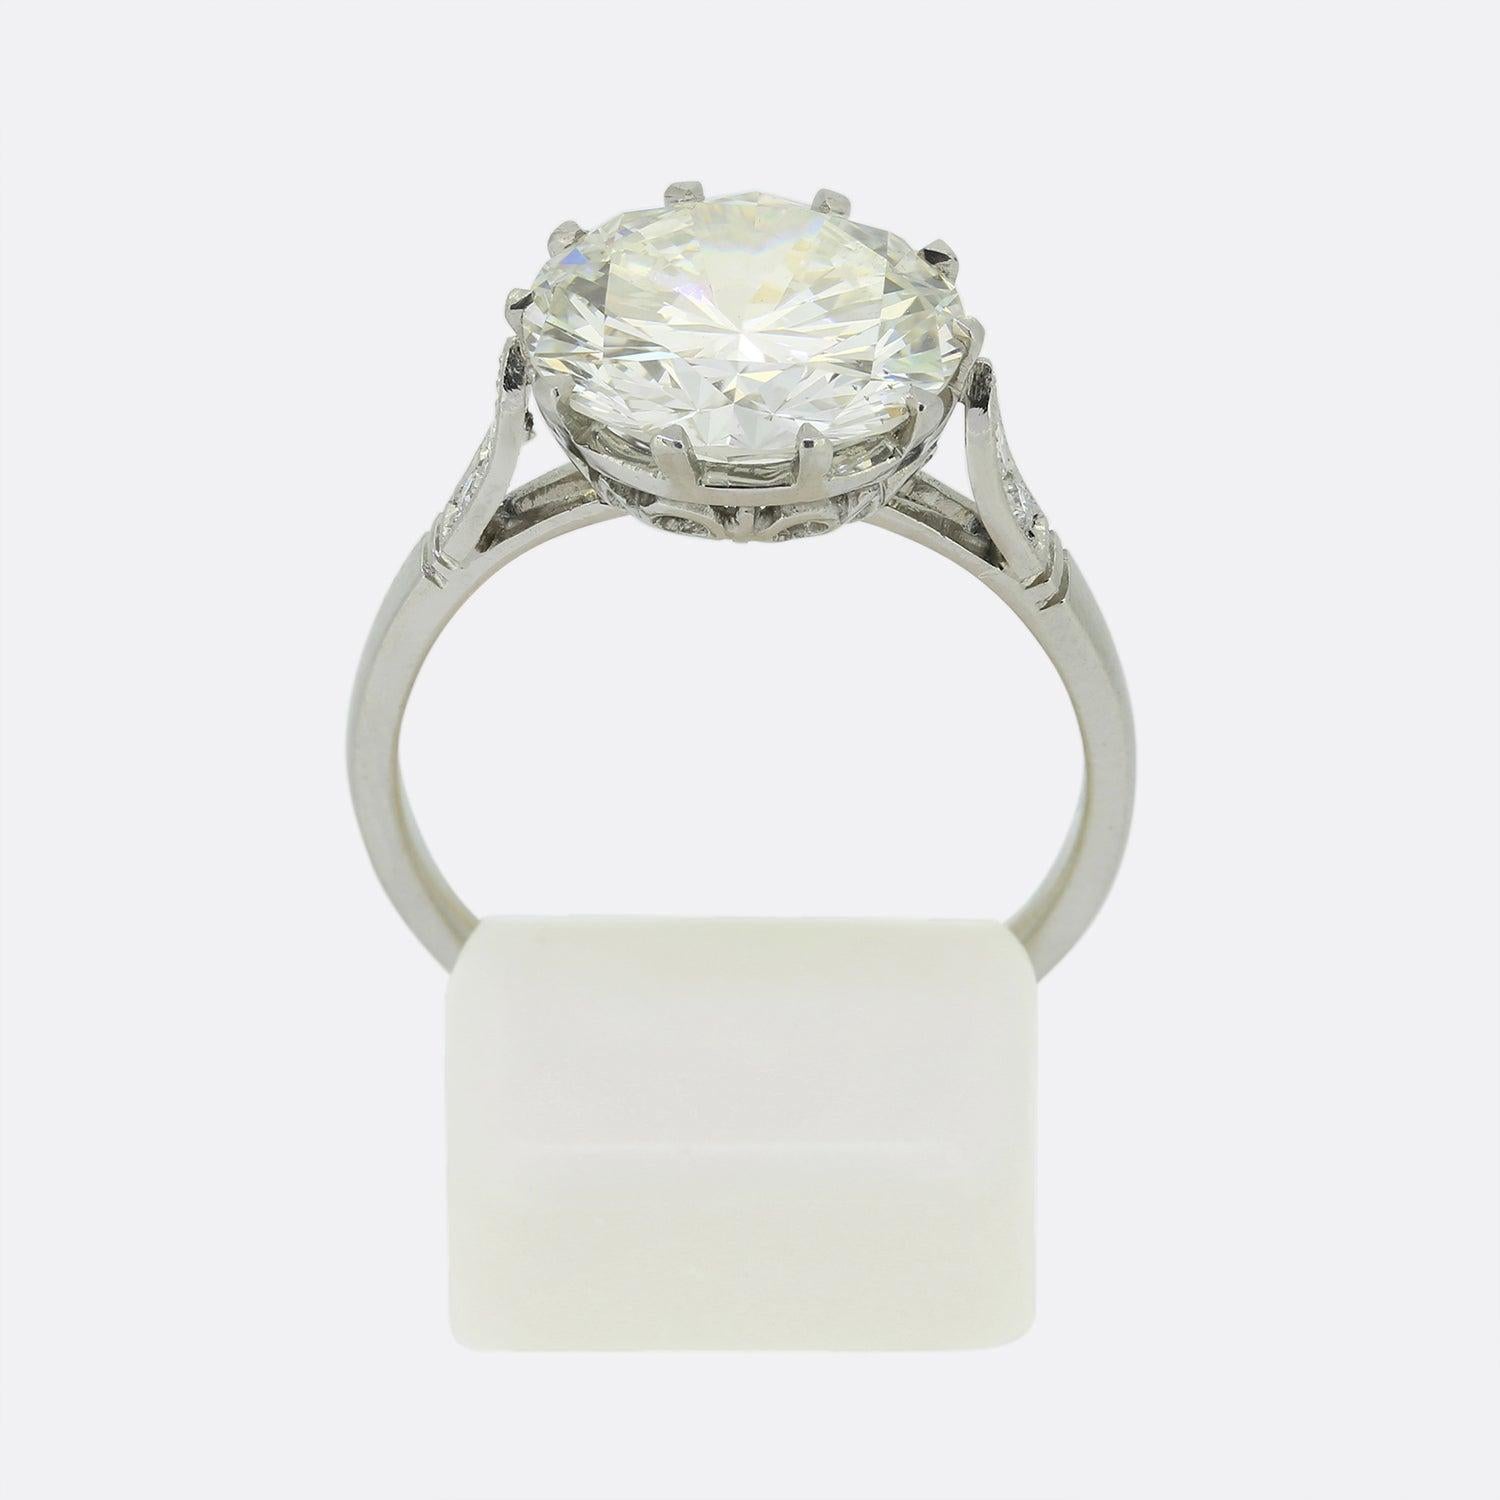 Women's 4.02 Carat Transitional Cut Diamond Solitaire Engagement Ring For Sale